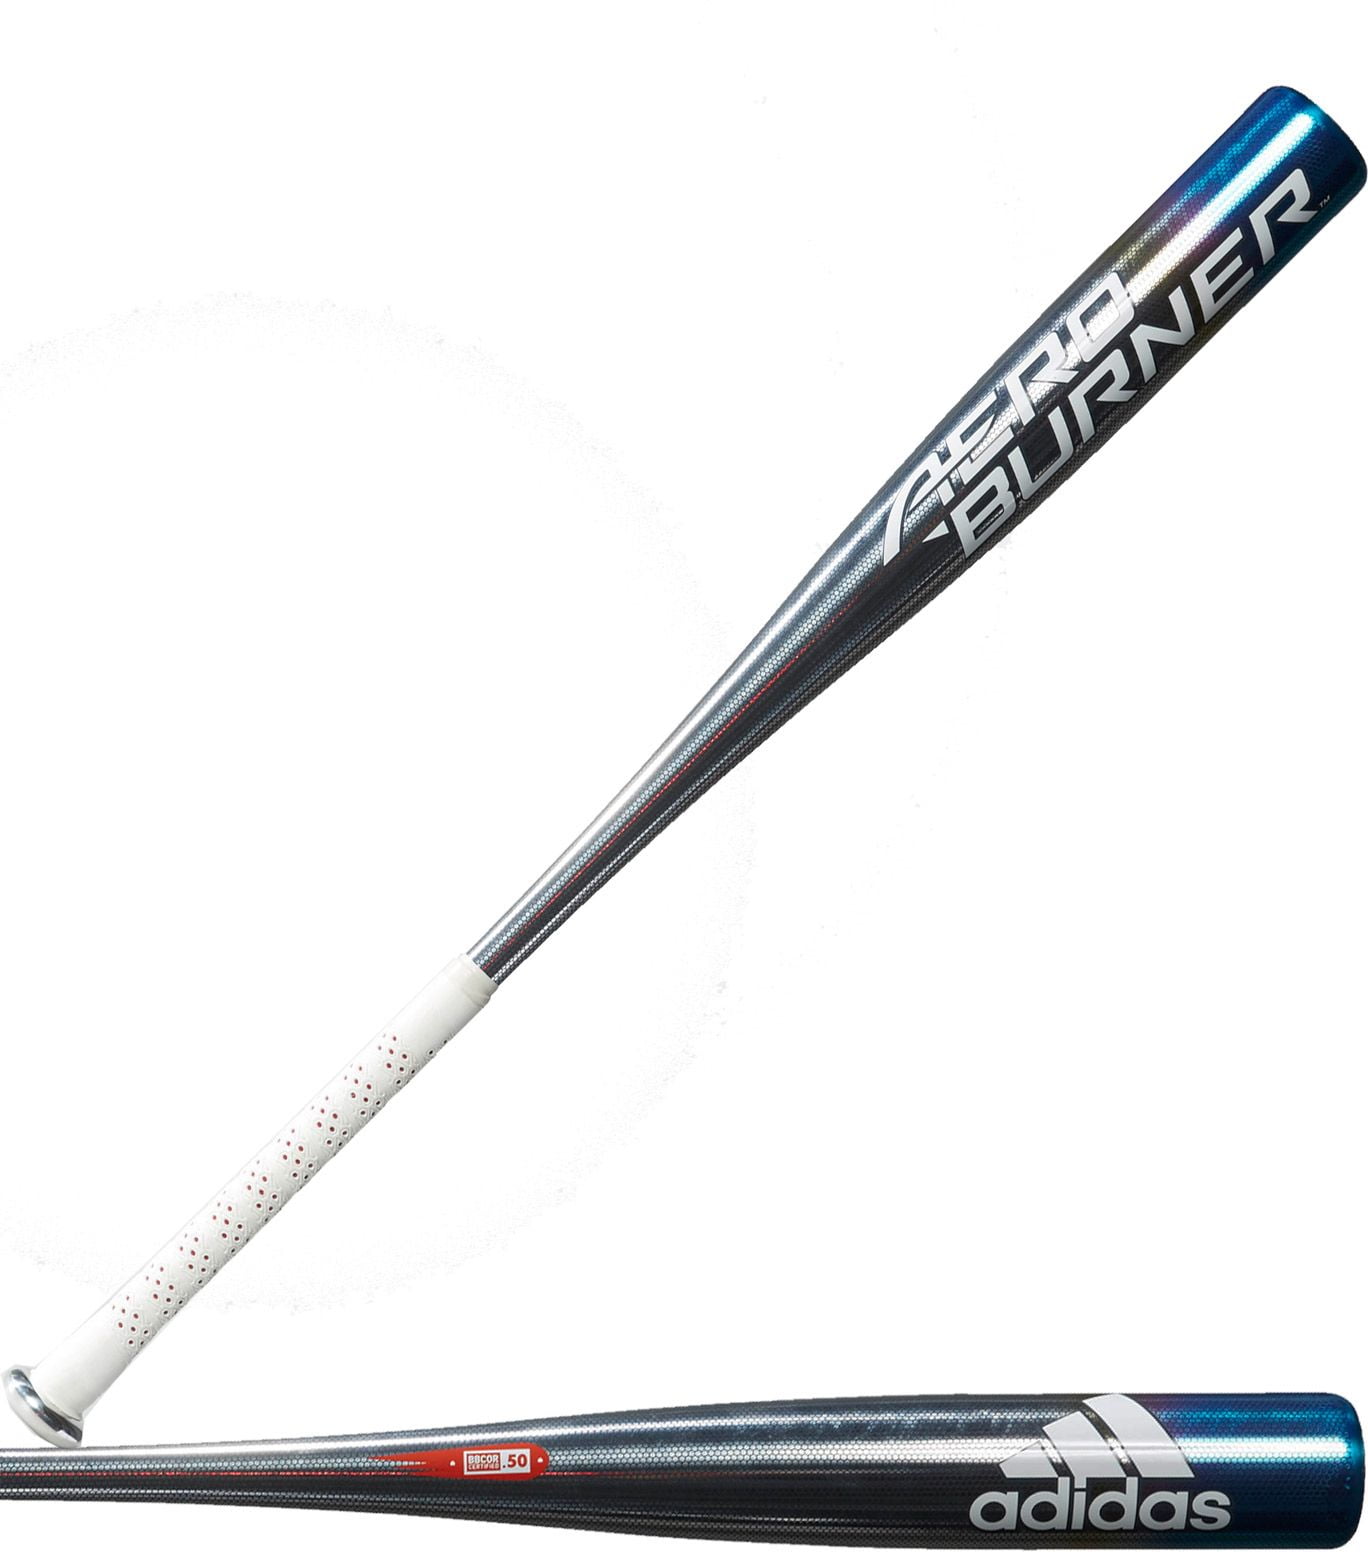 adidas aeroburner comp bbcor baseball bat stores